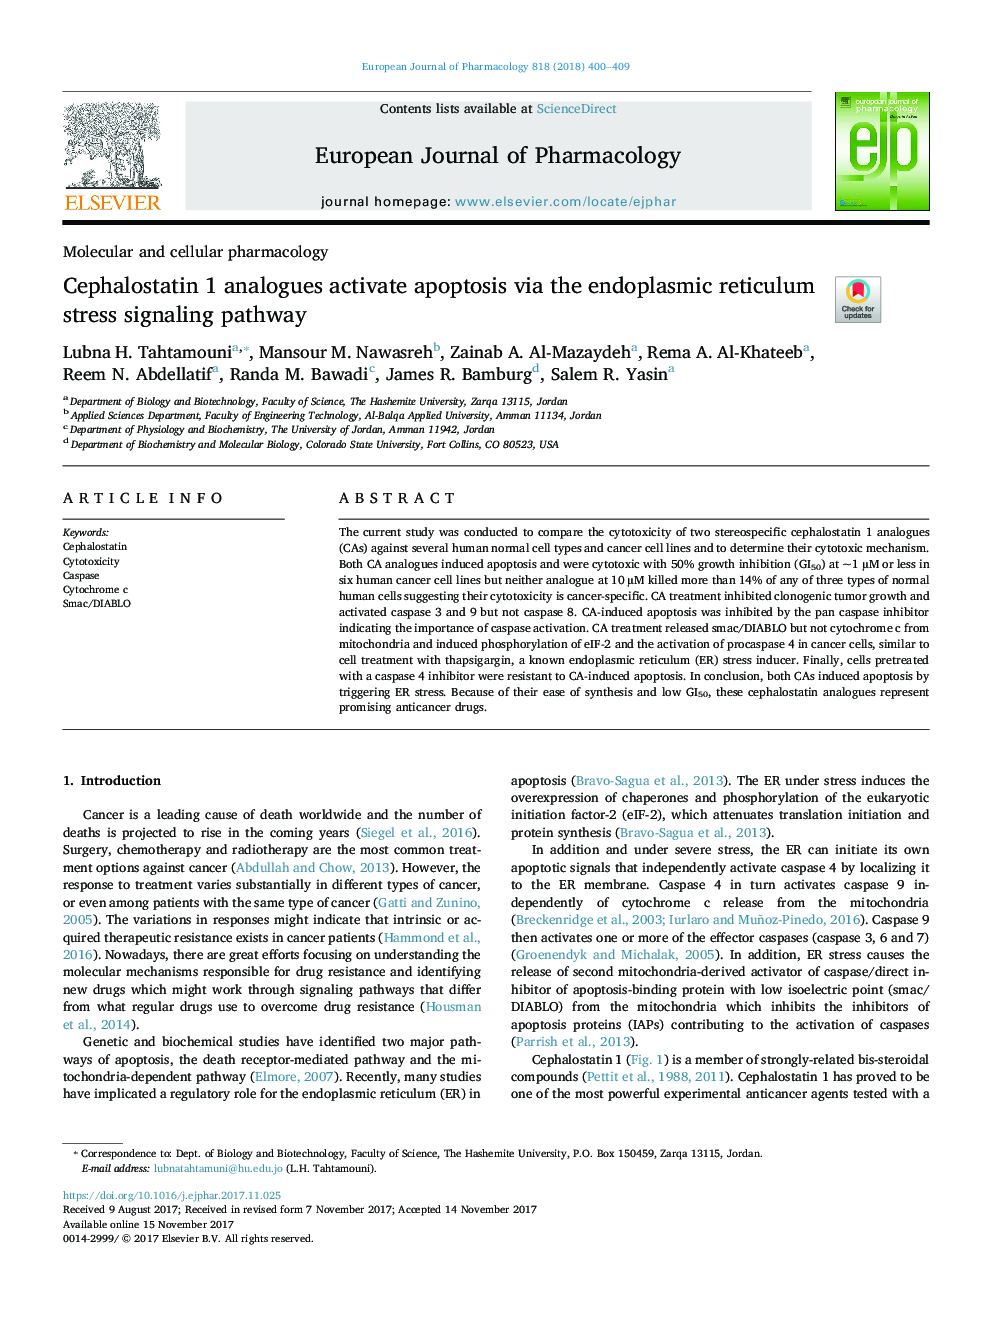 Cephalostatin 1 analogues activate apoptosis via the endoplasmic reticulum stress signaling pathway